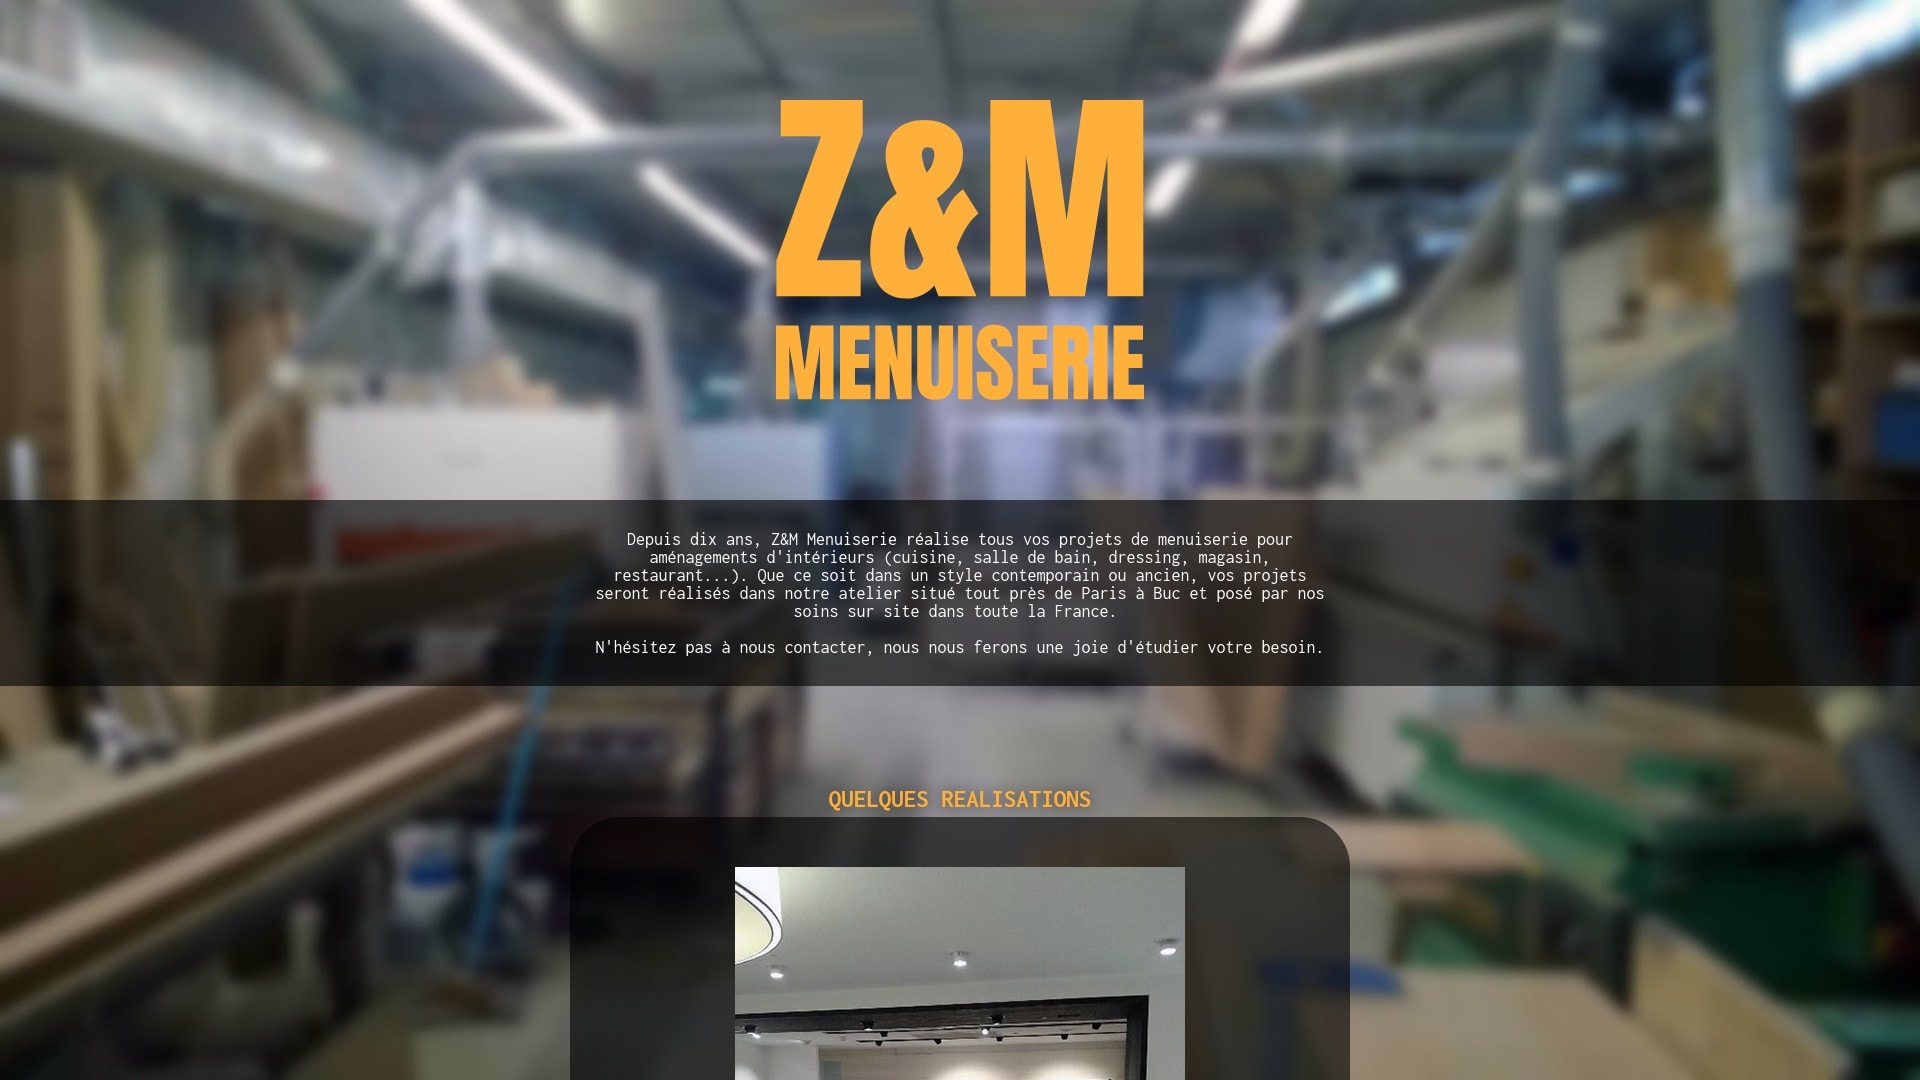 ZM menuiserie website by Thomas MEBIUS